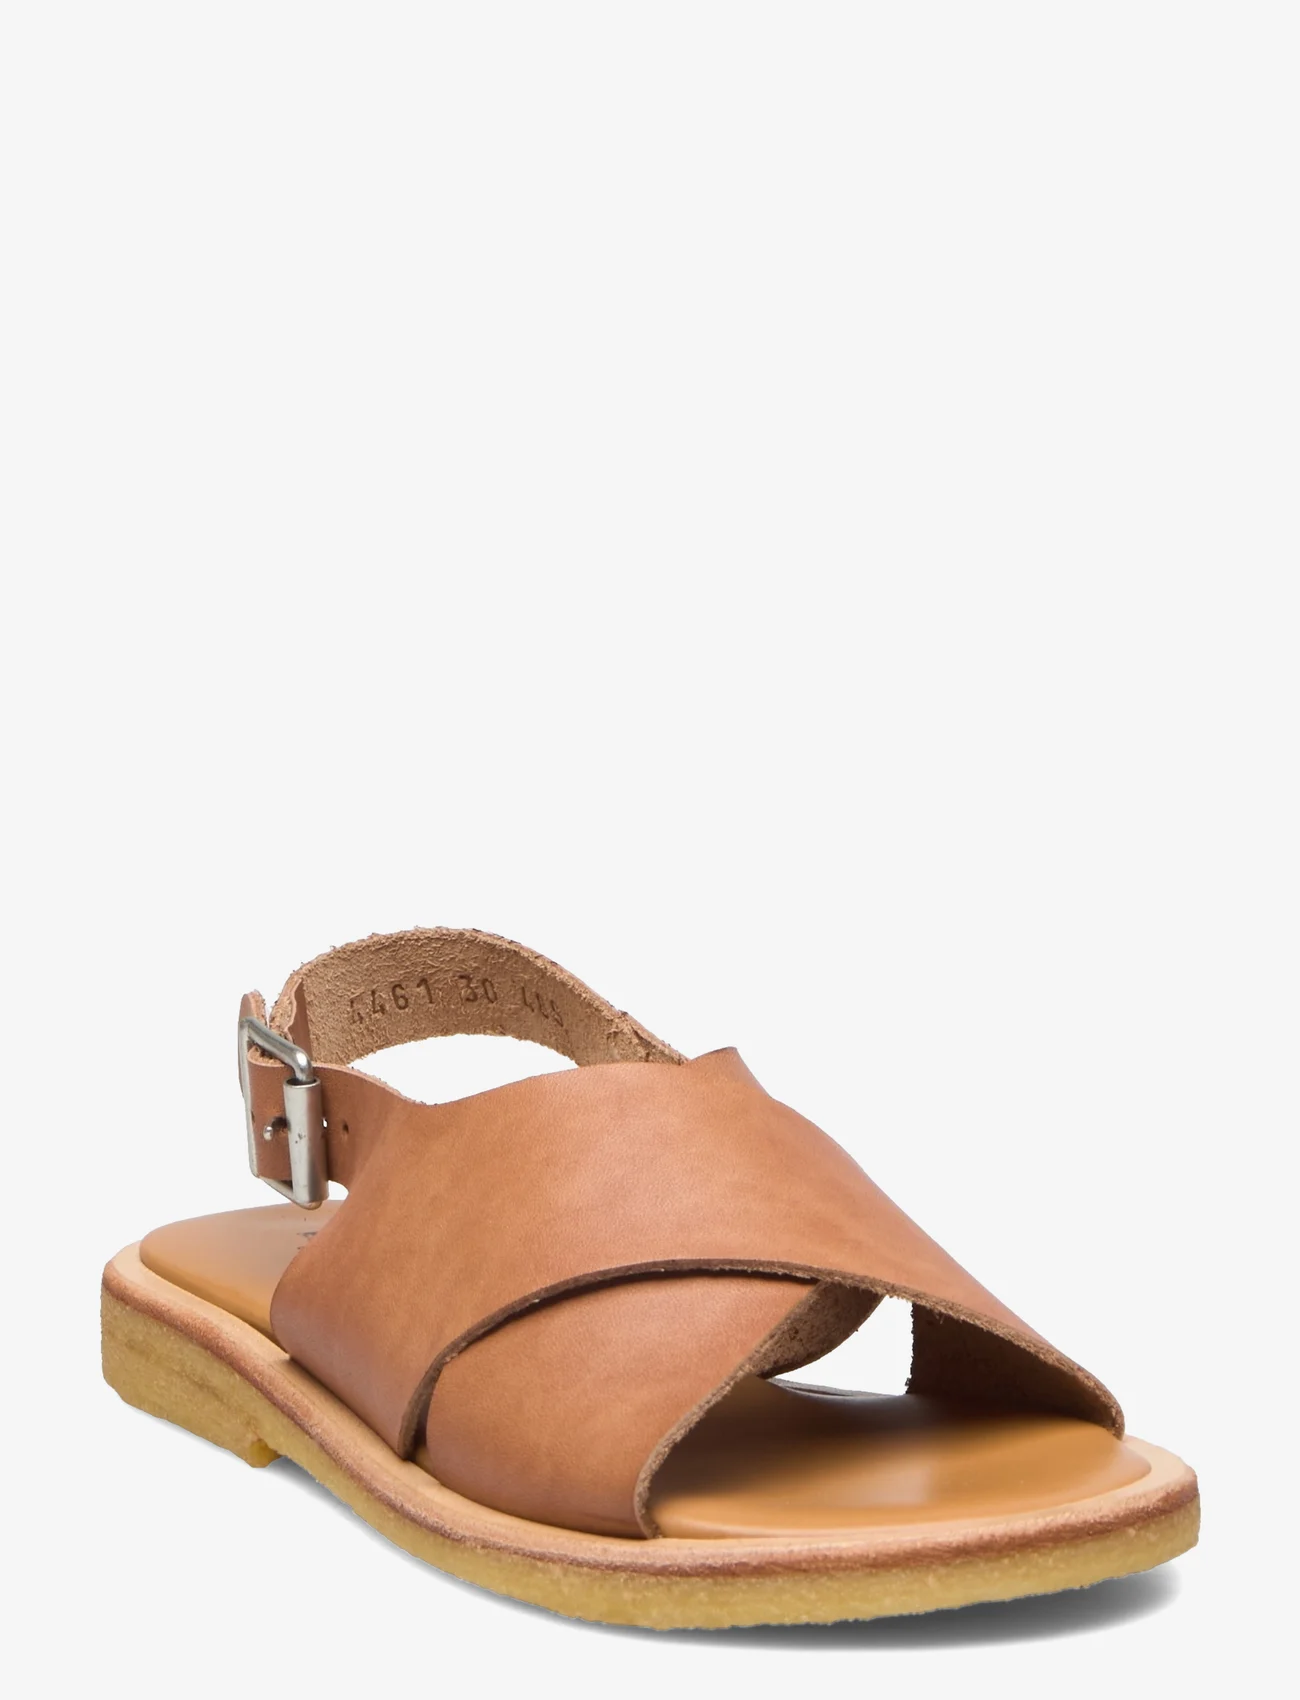 ANGULUS - Sandals - flat - open toe - op - sommarfynd - 1789 tan - 0